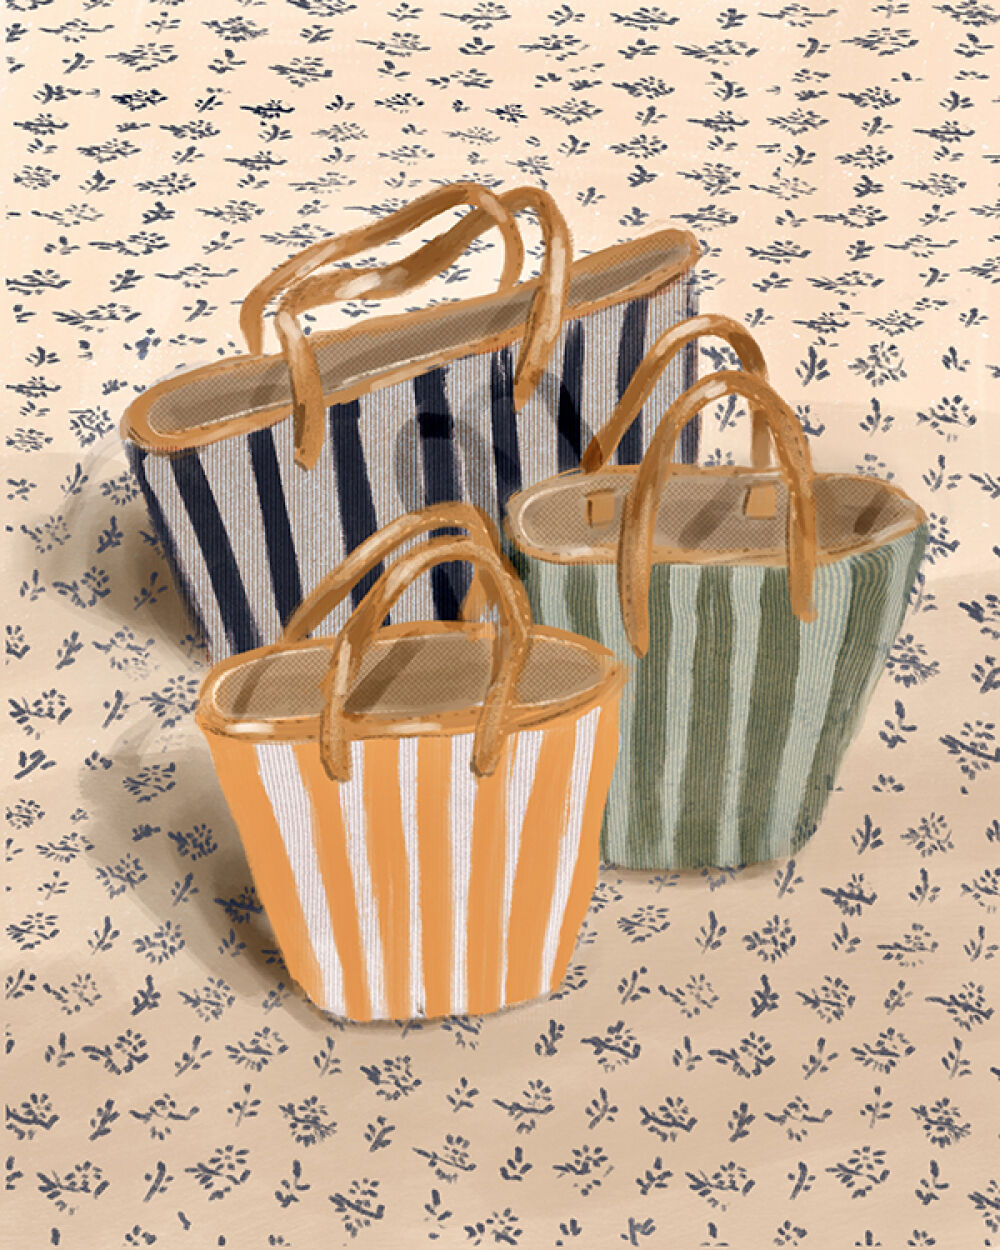 Handbags by Christina Gliha for Mansur Gavriel